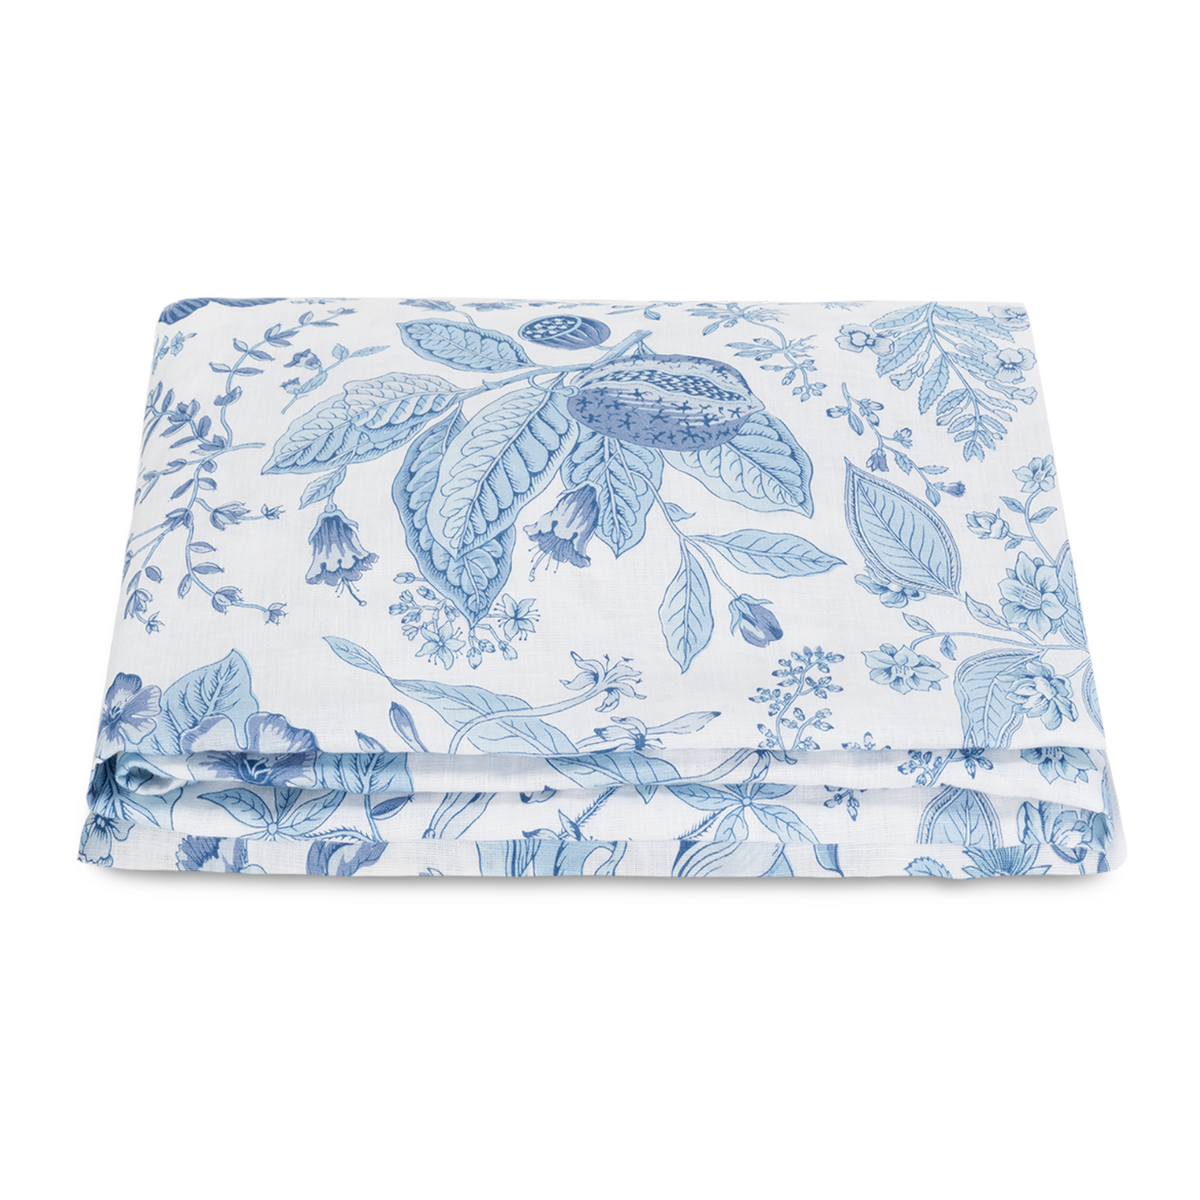 Folded Fitted Sheet of Matouk Schumacher Pomegranate Linen Bedding in Porcelain Blue Color